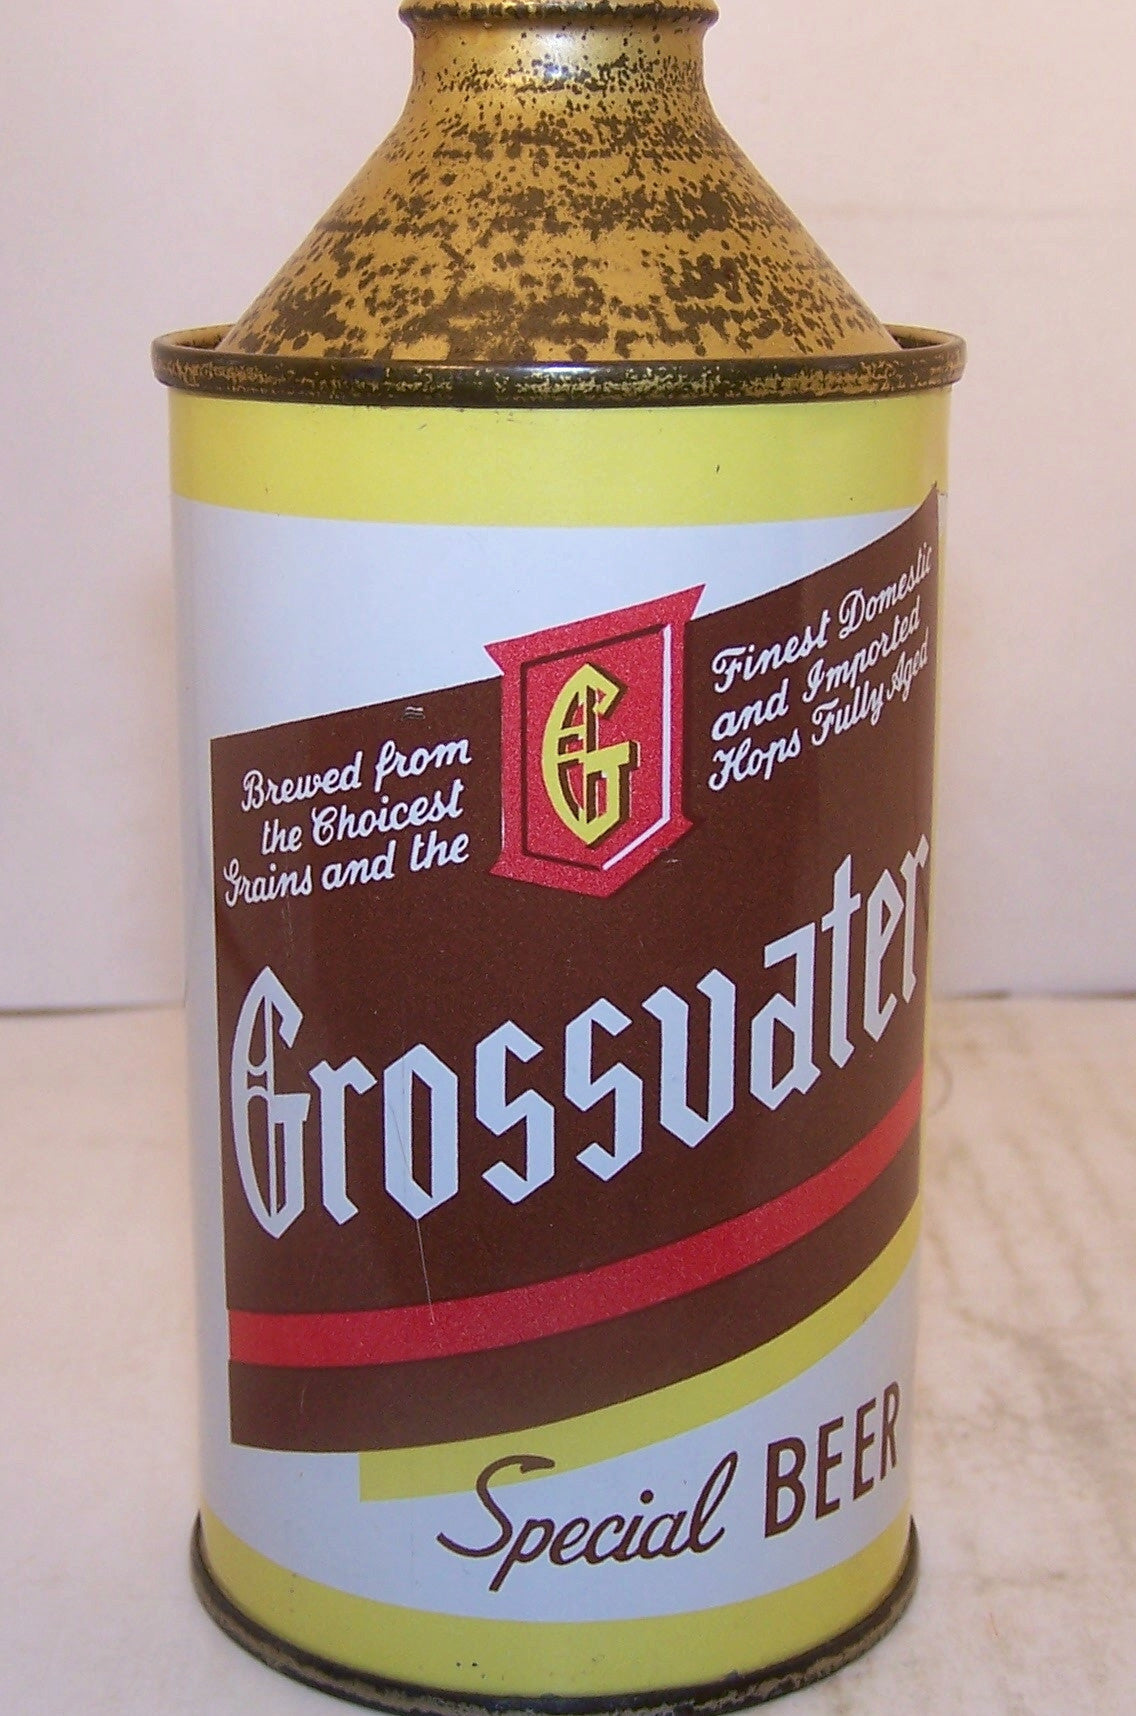 Grossvater Special Beer, USBC 168-3, Grade 1/1+ Sold on 4/6/15